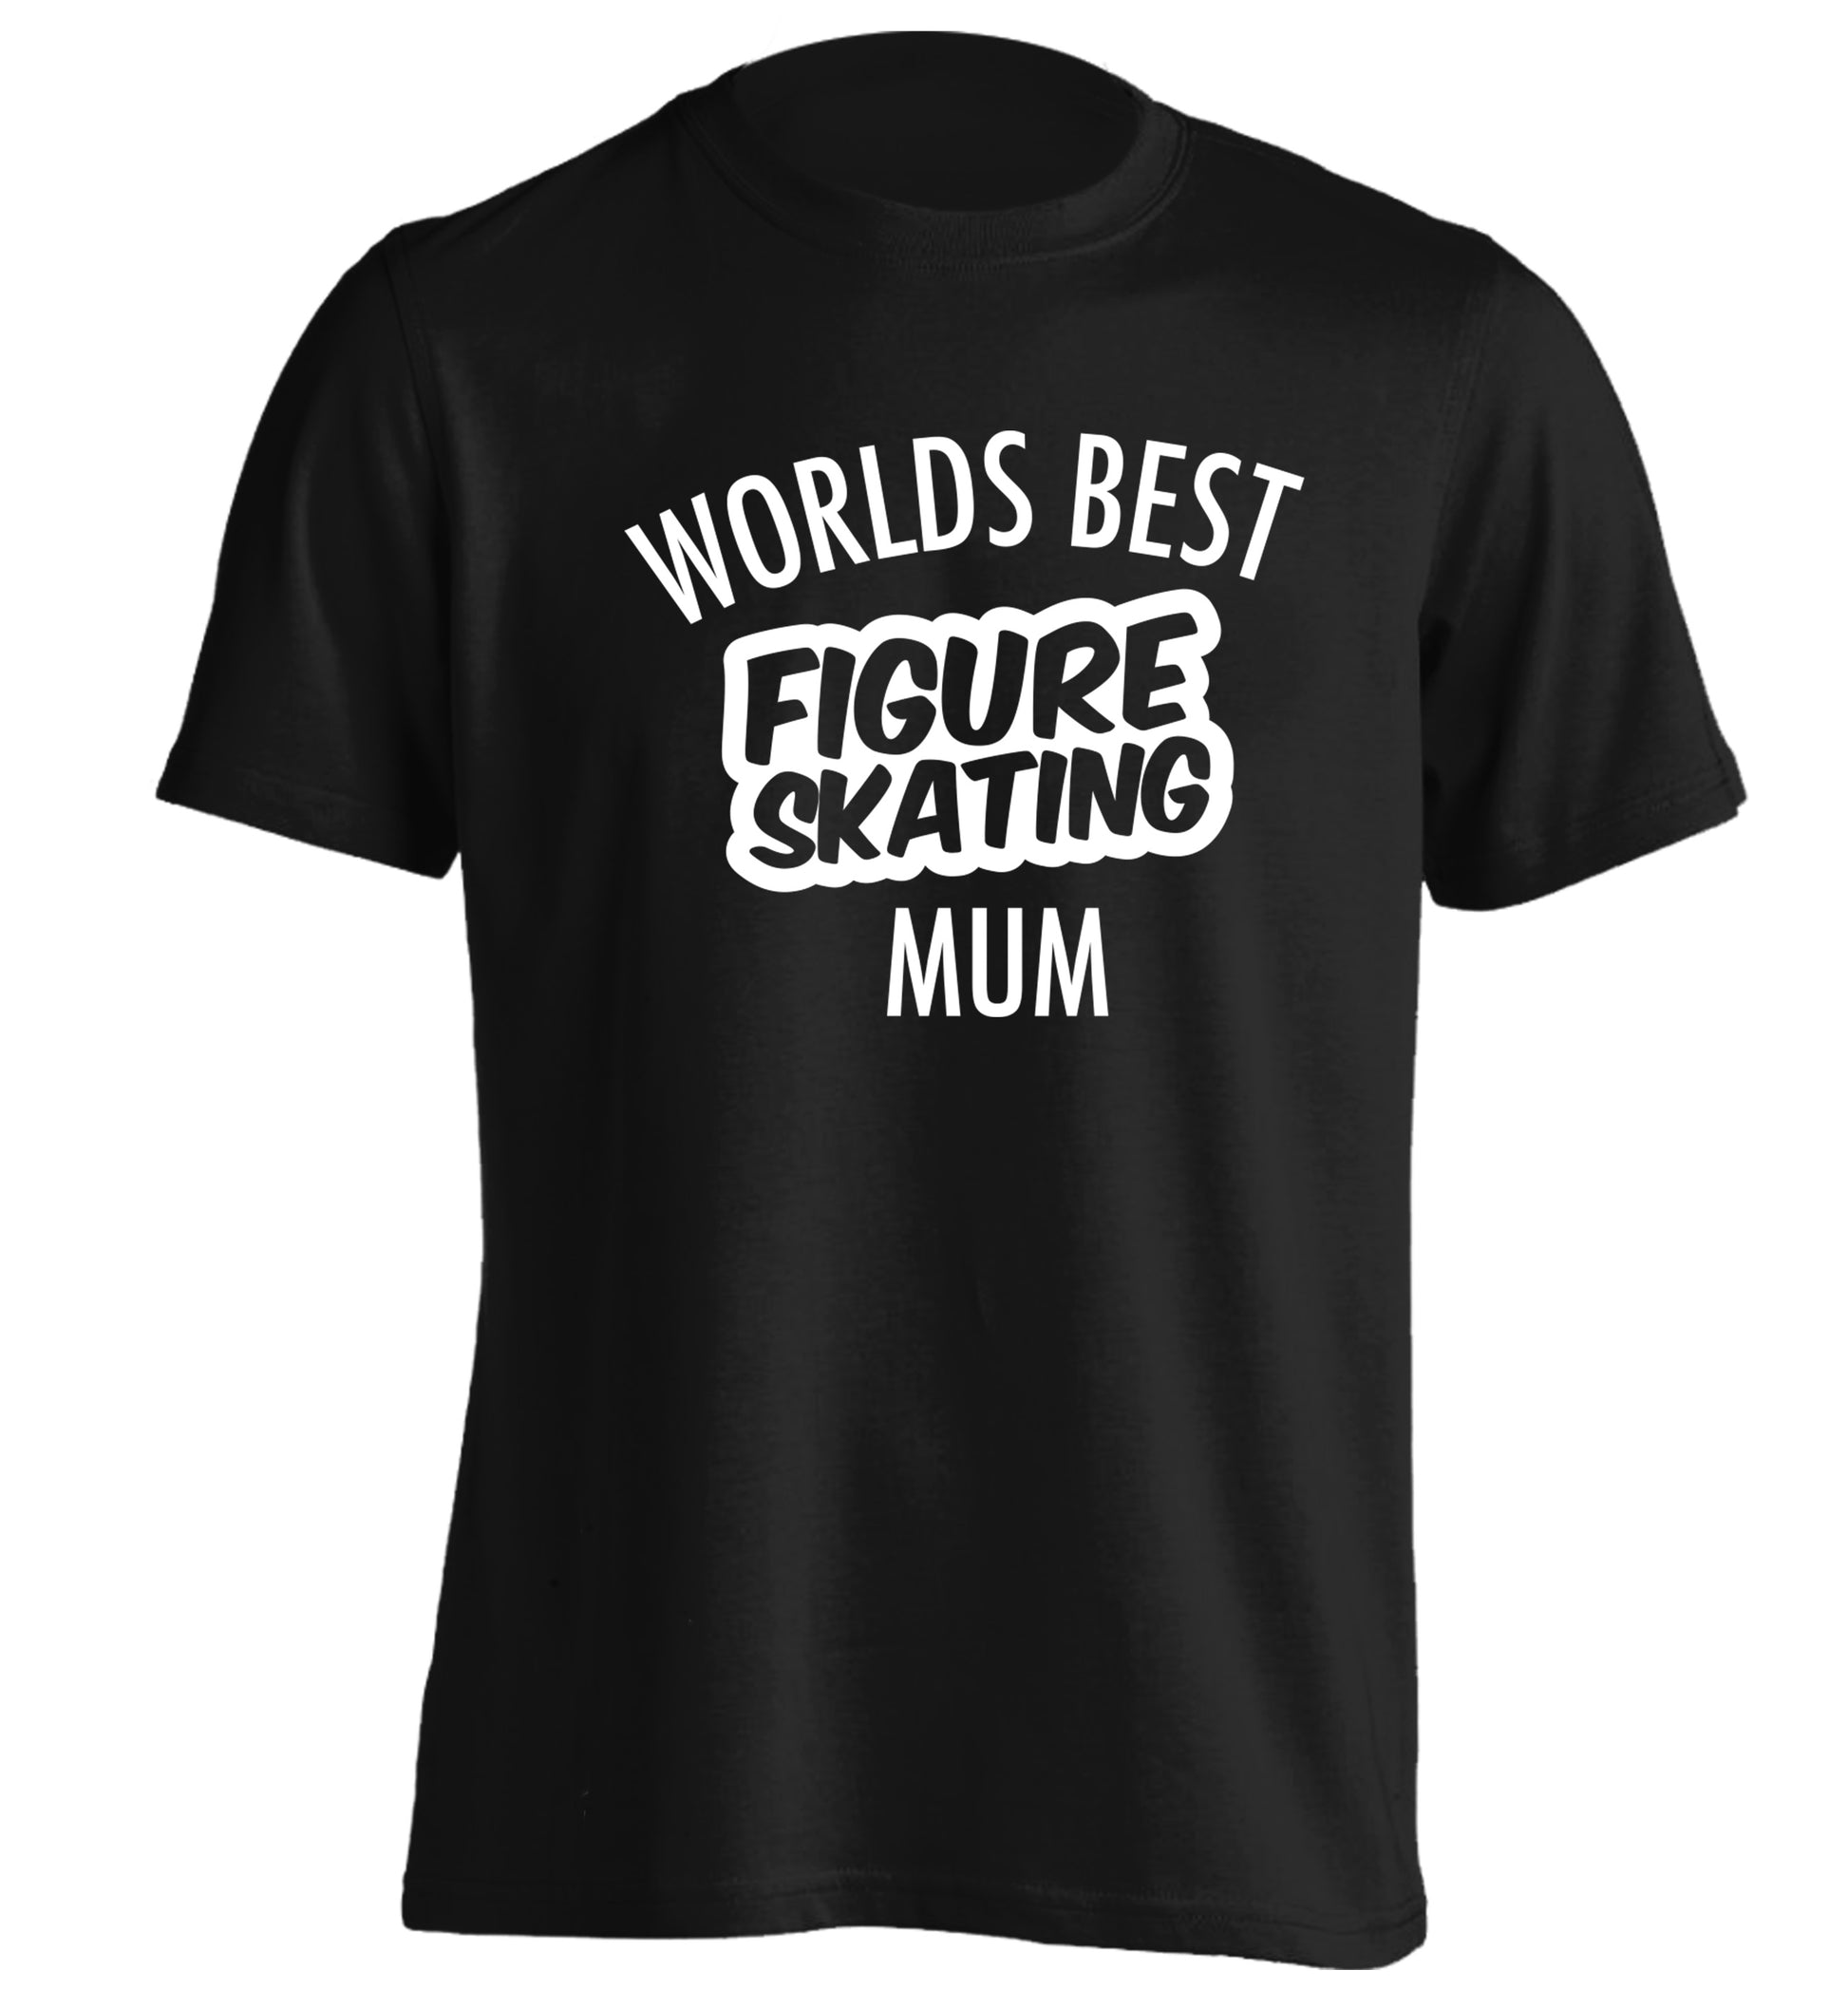 Worlds best figure skating mum adults unisexblack Tshirt 2XL